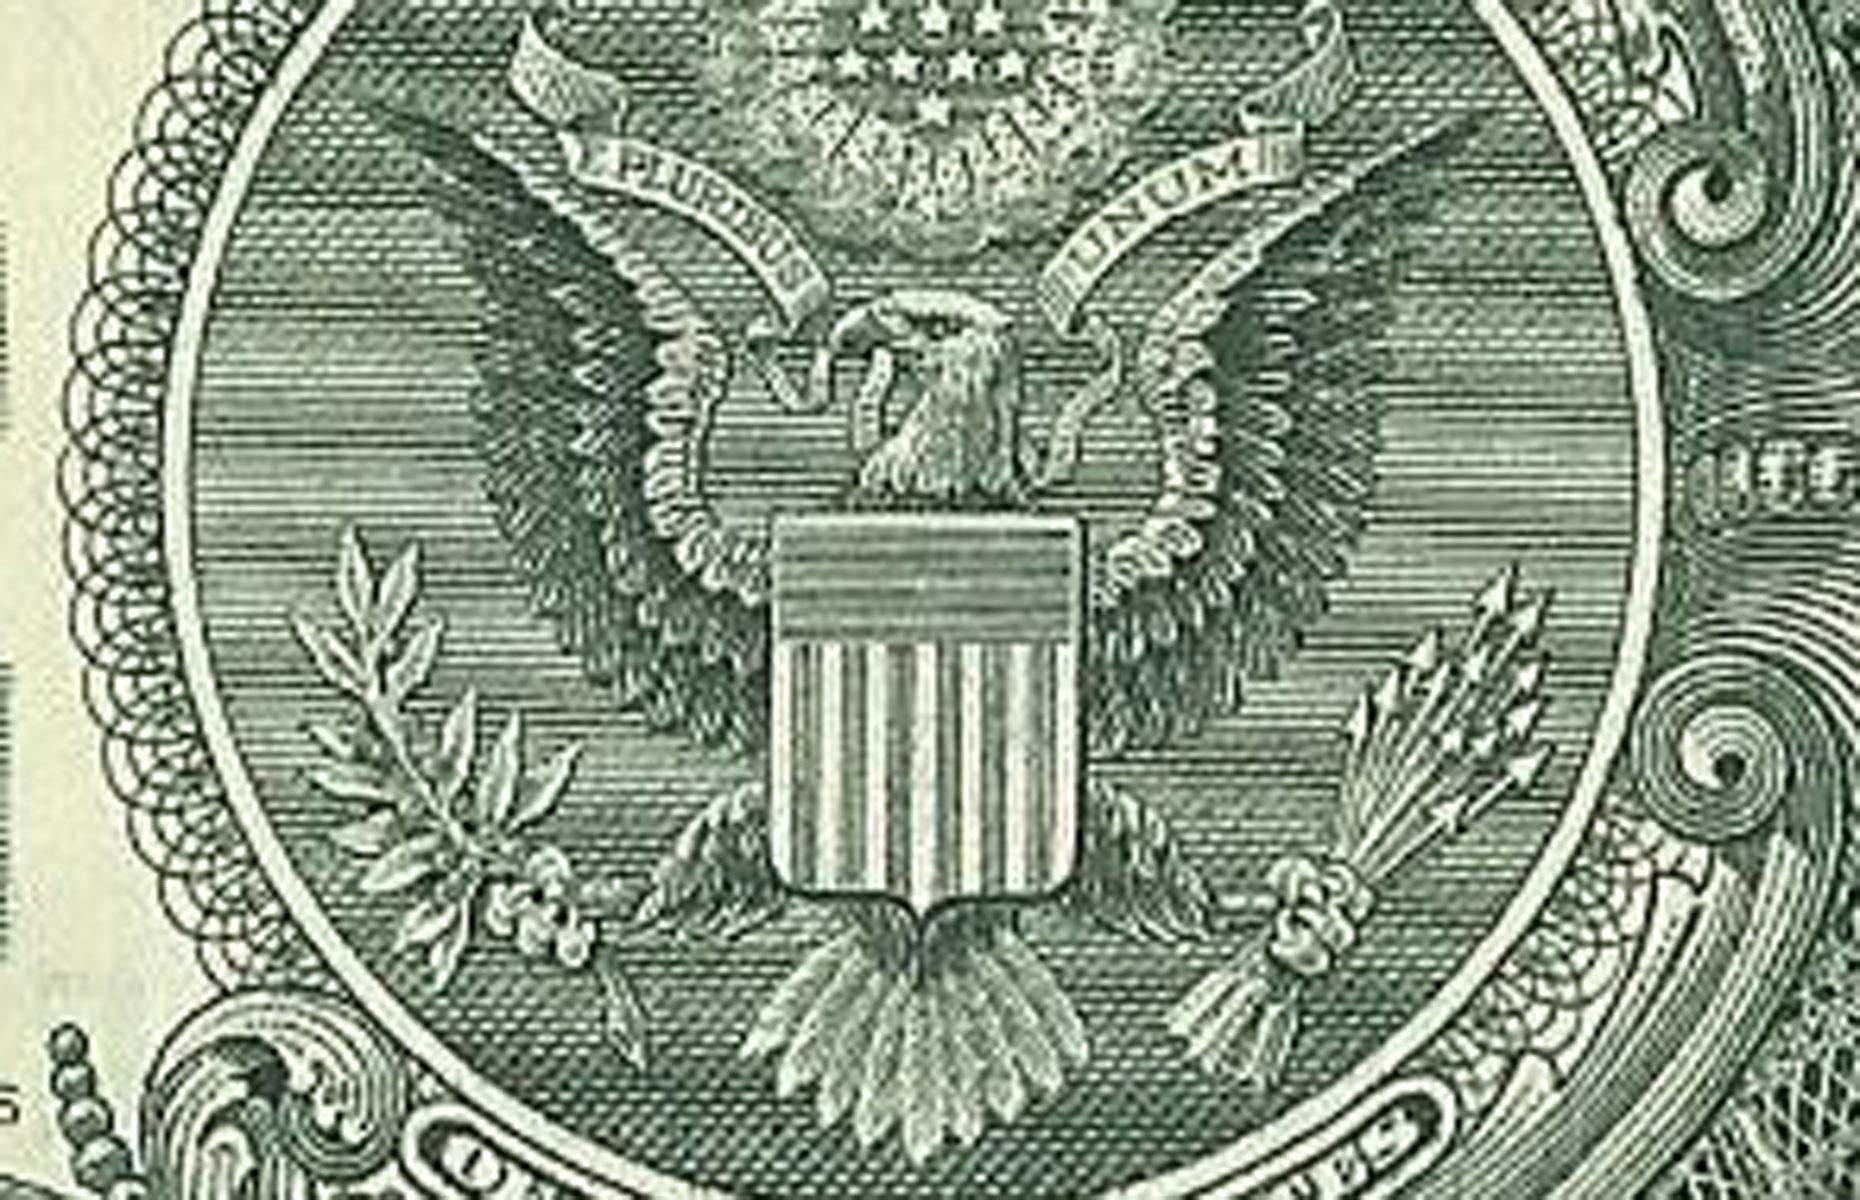 US $1 bill: bald eagle 